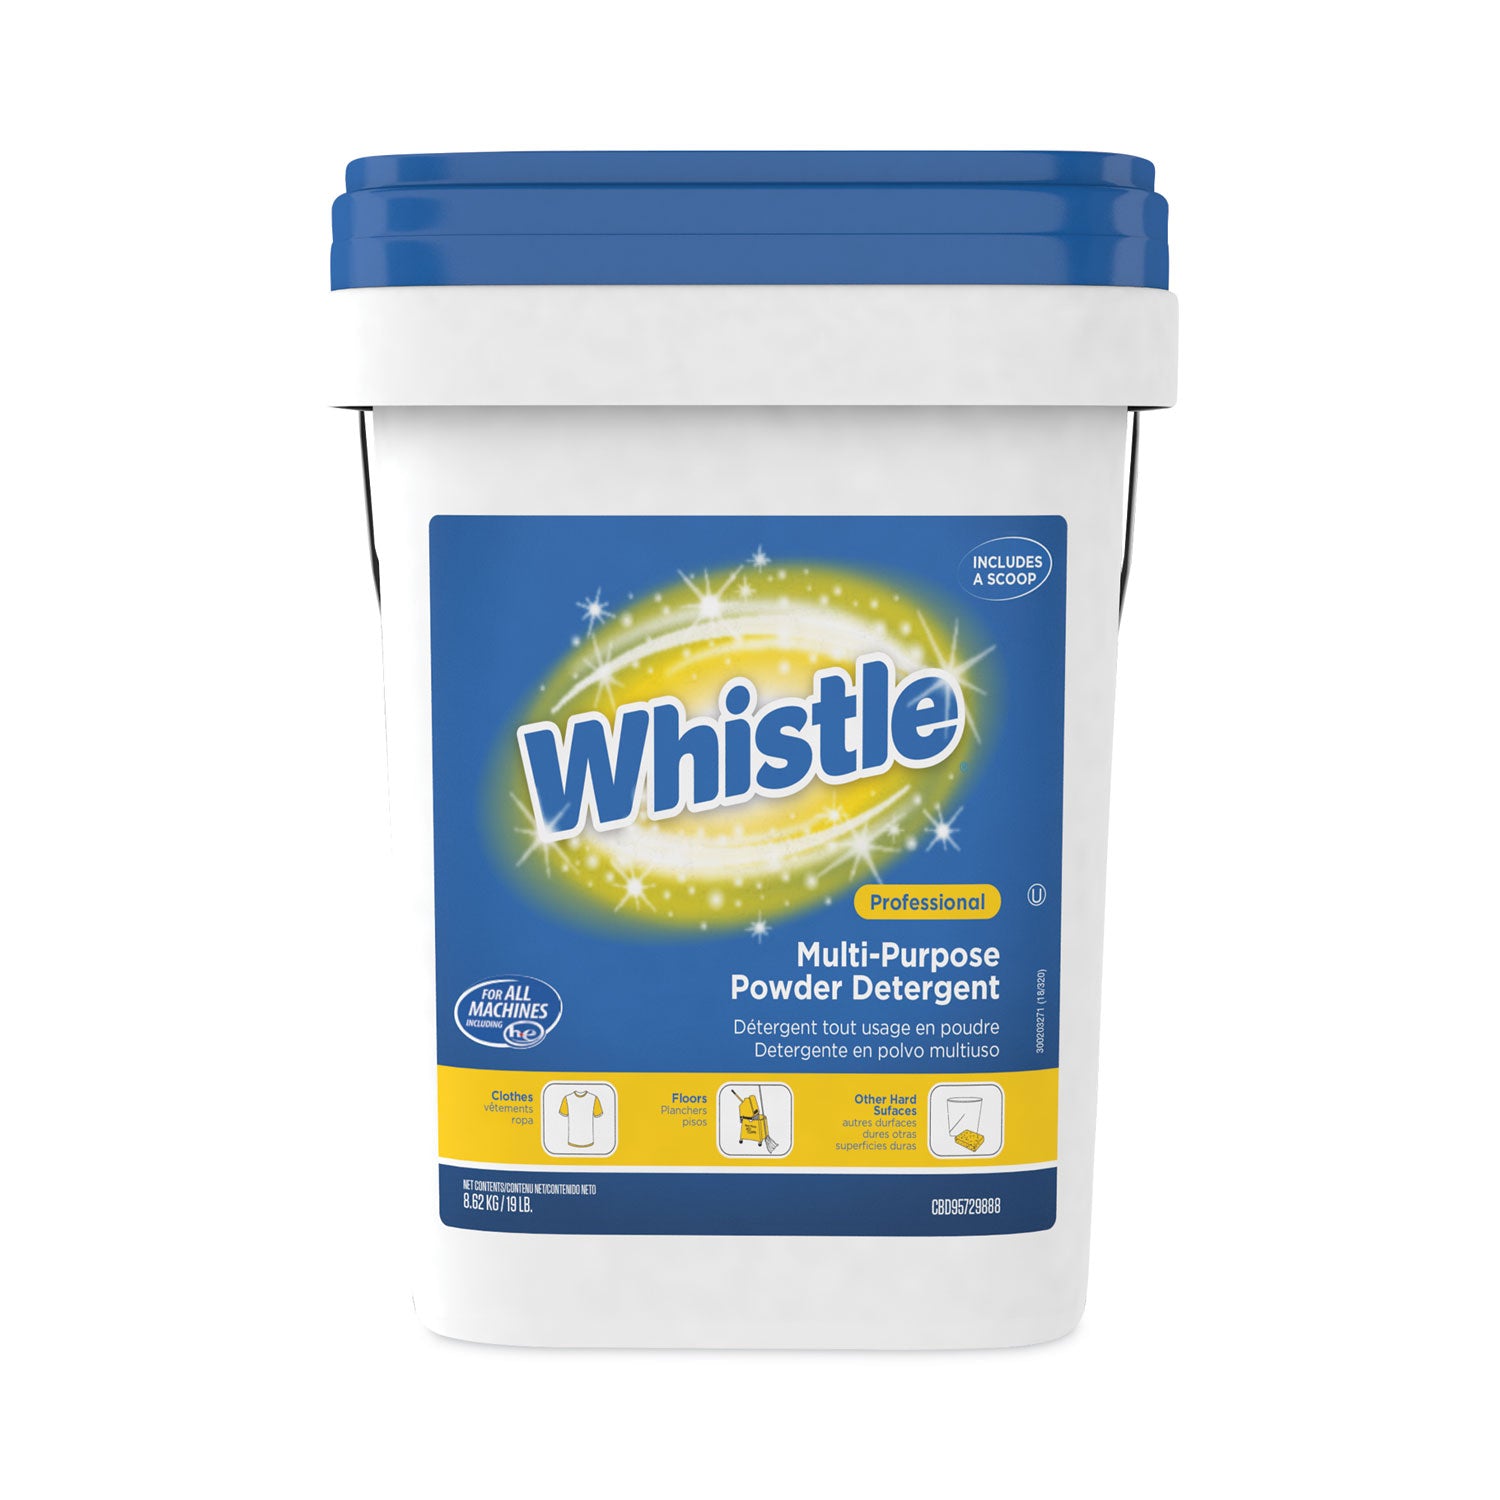 whistle-multi-purpose-powder-detergent-citrus-19-lb-pail_dvocbd95729888 - 1